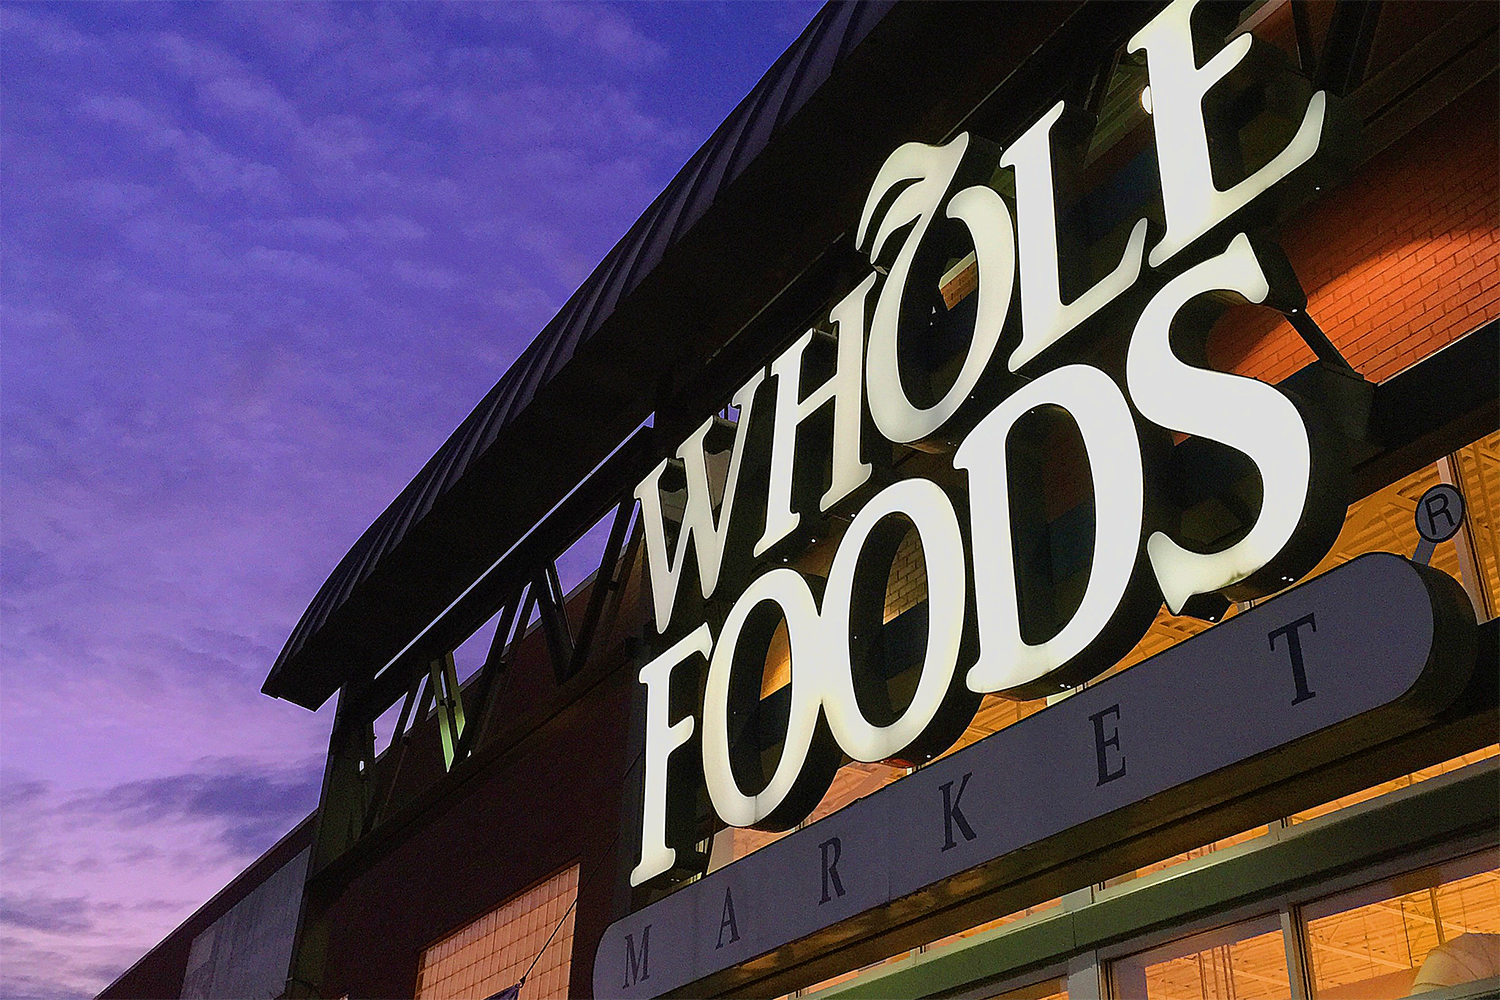 Amazon-owned Whole Foods